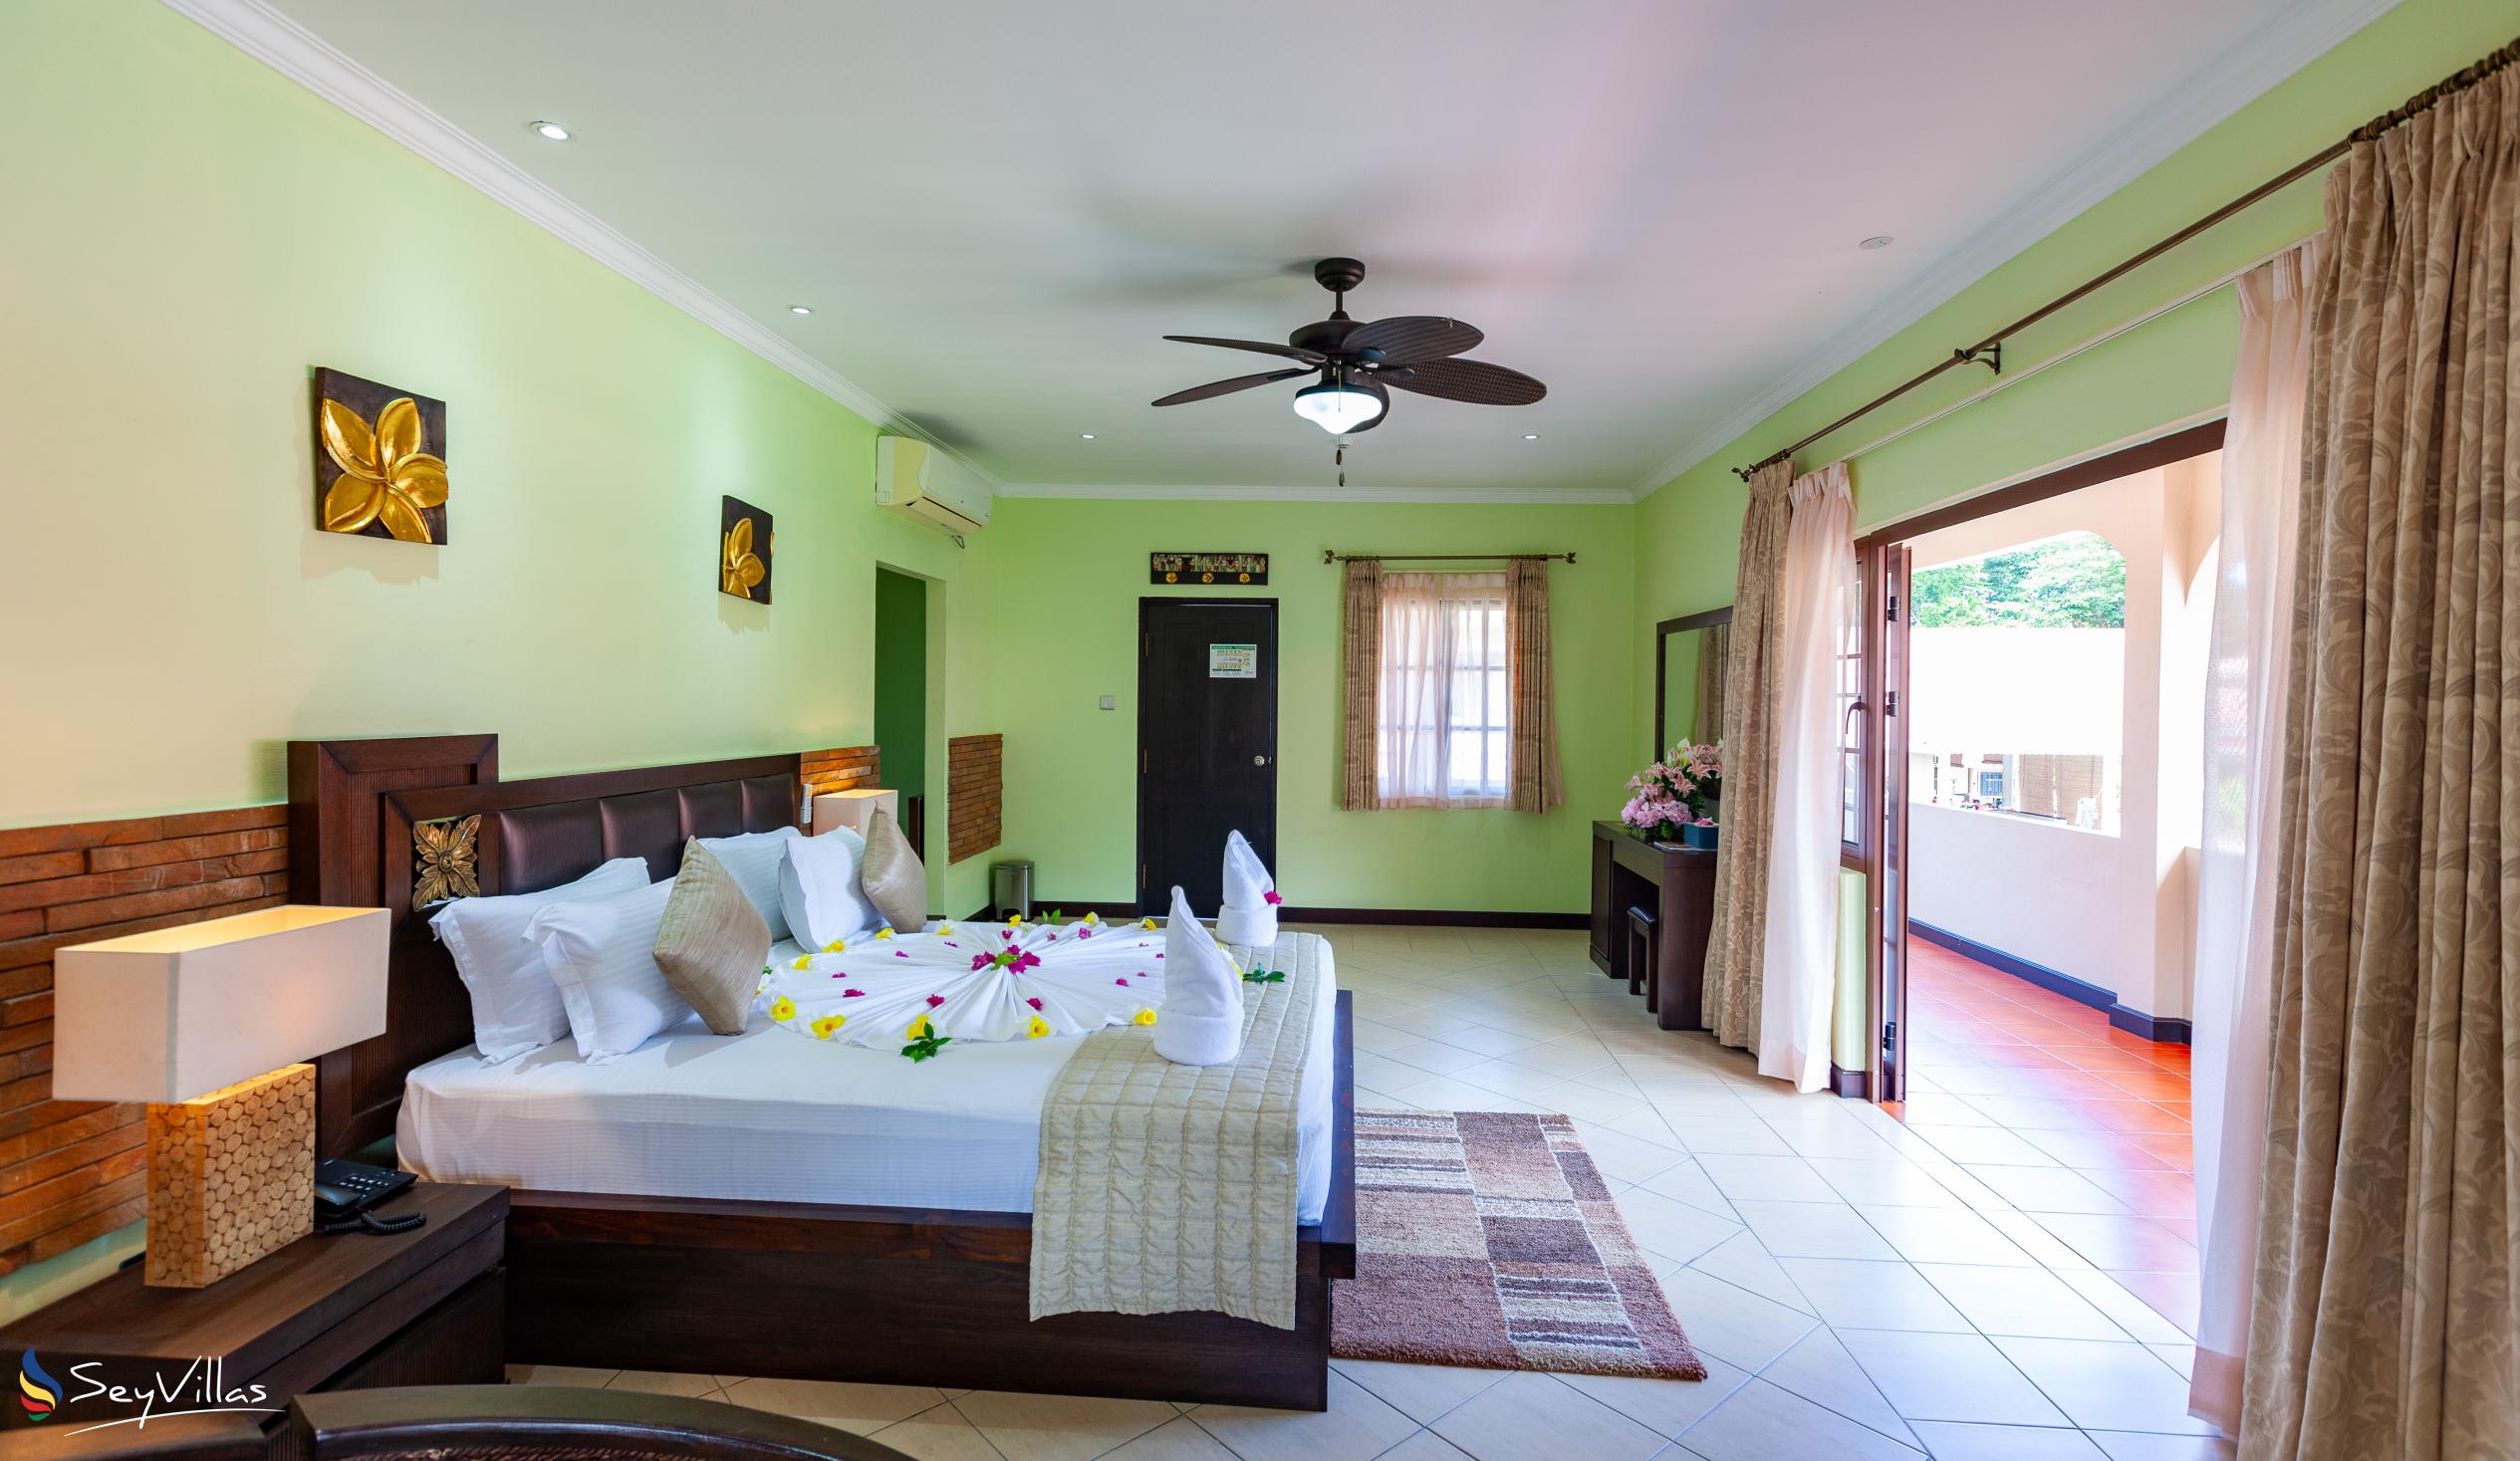 Foto 59: Oasis Hotel, Restaurant & Spa - Chambre Deluxe - Praslin (Seychelles)